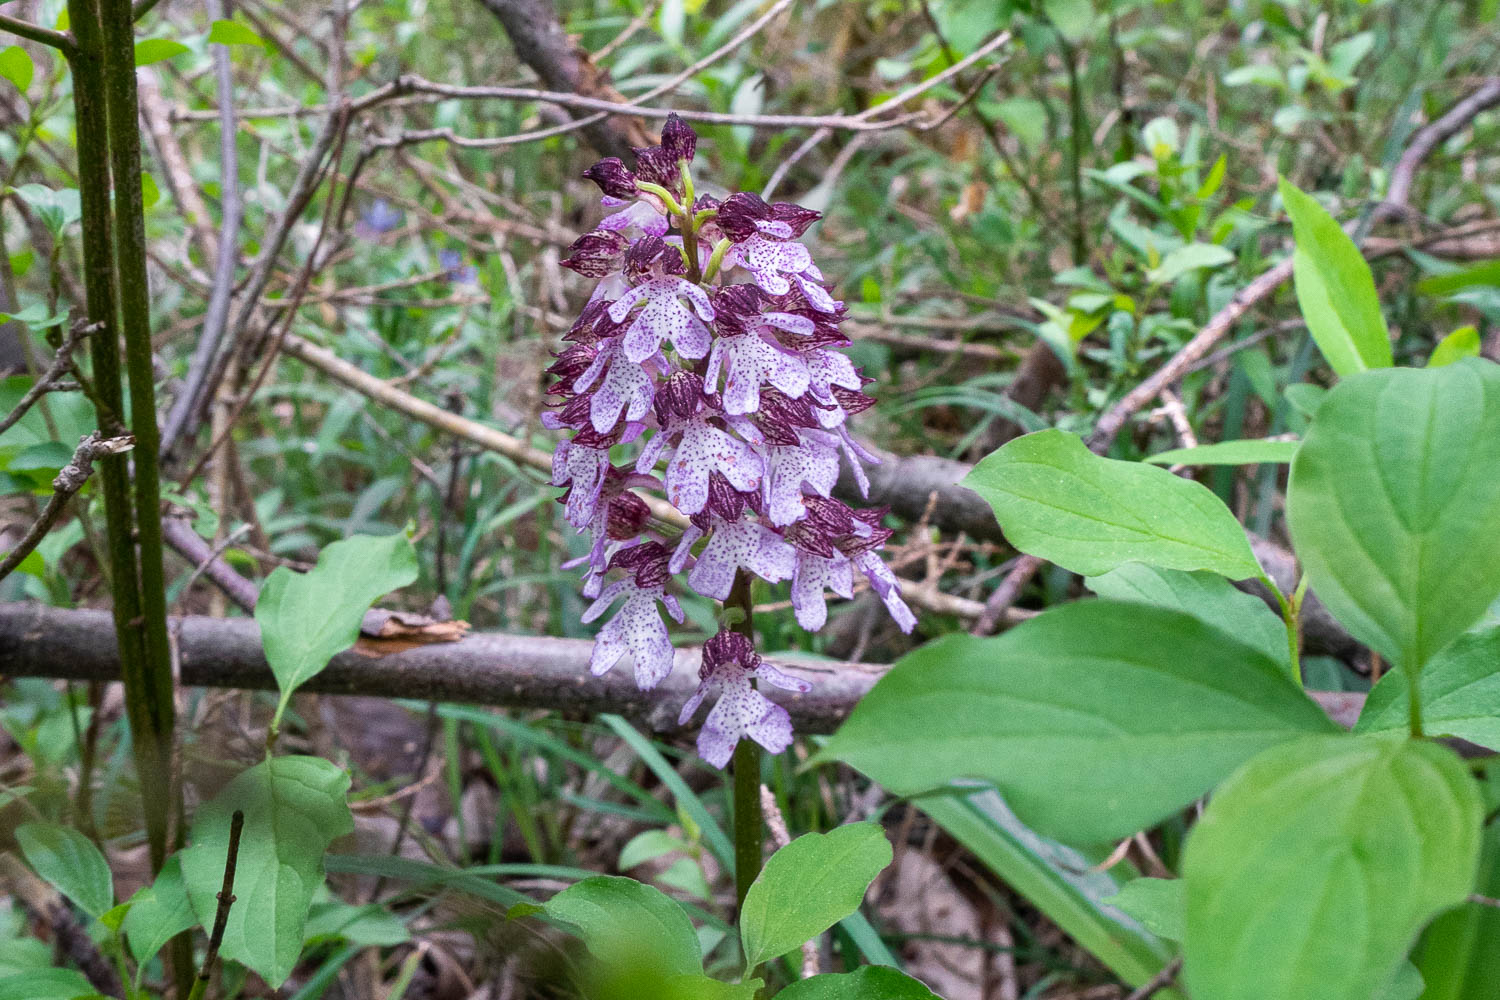 Purpur-Knabenkraut (Orchis purpurea)